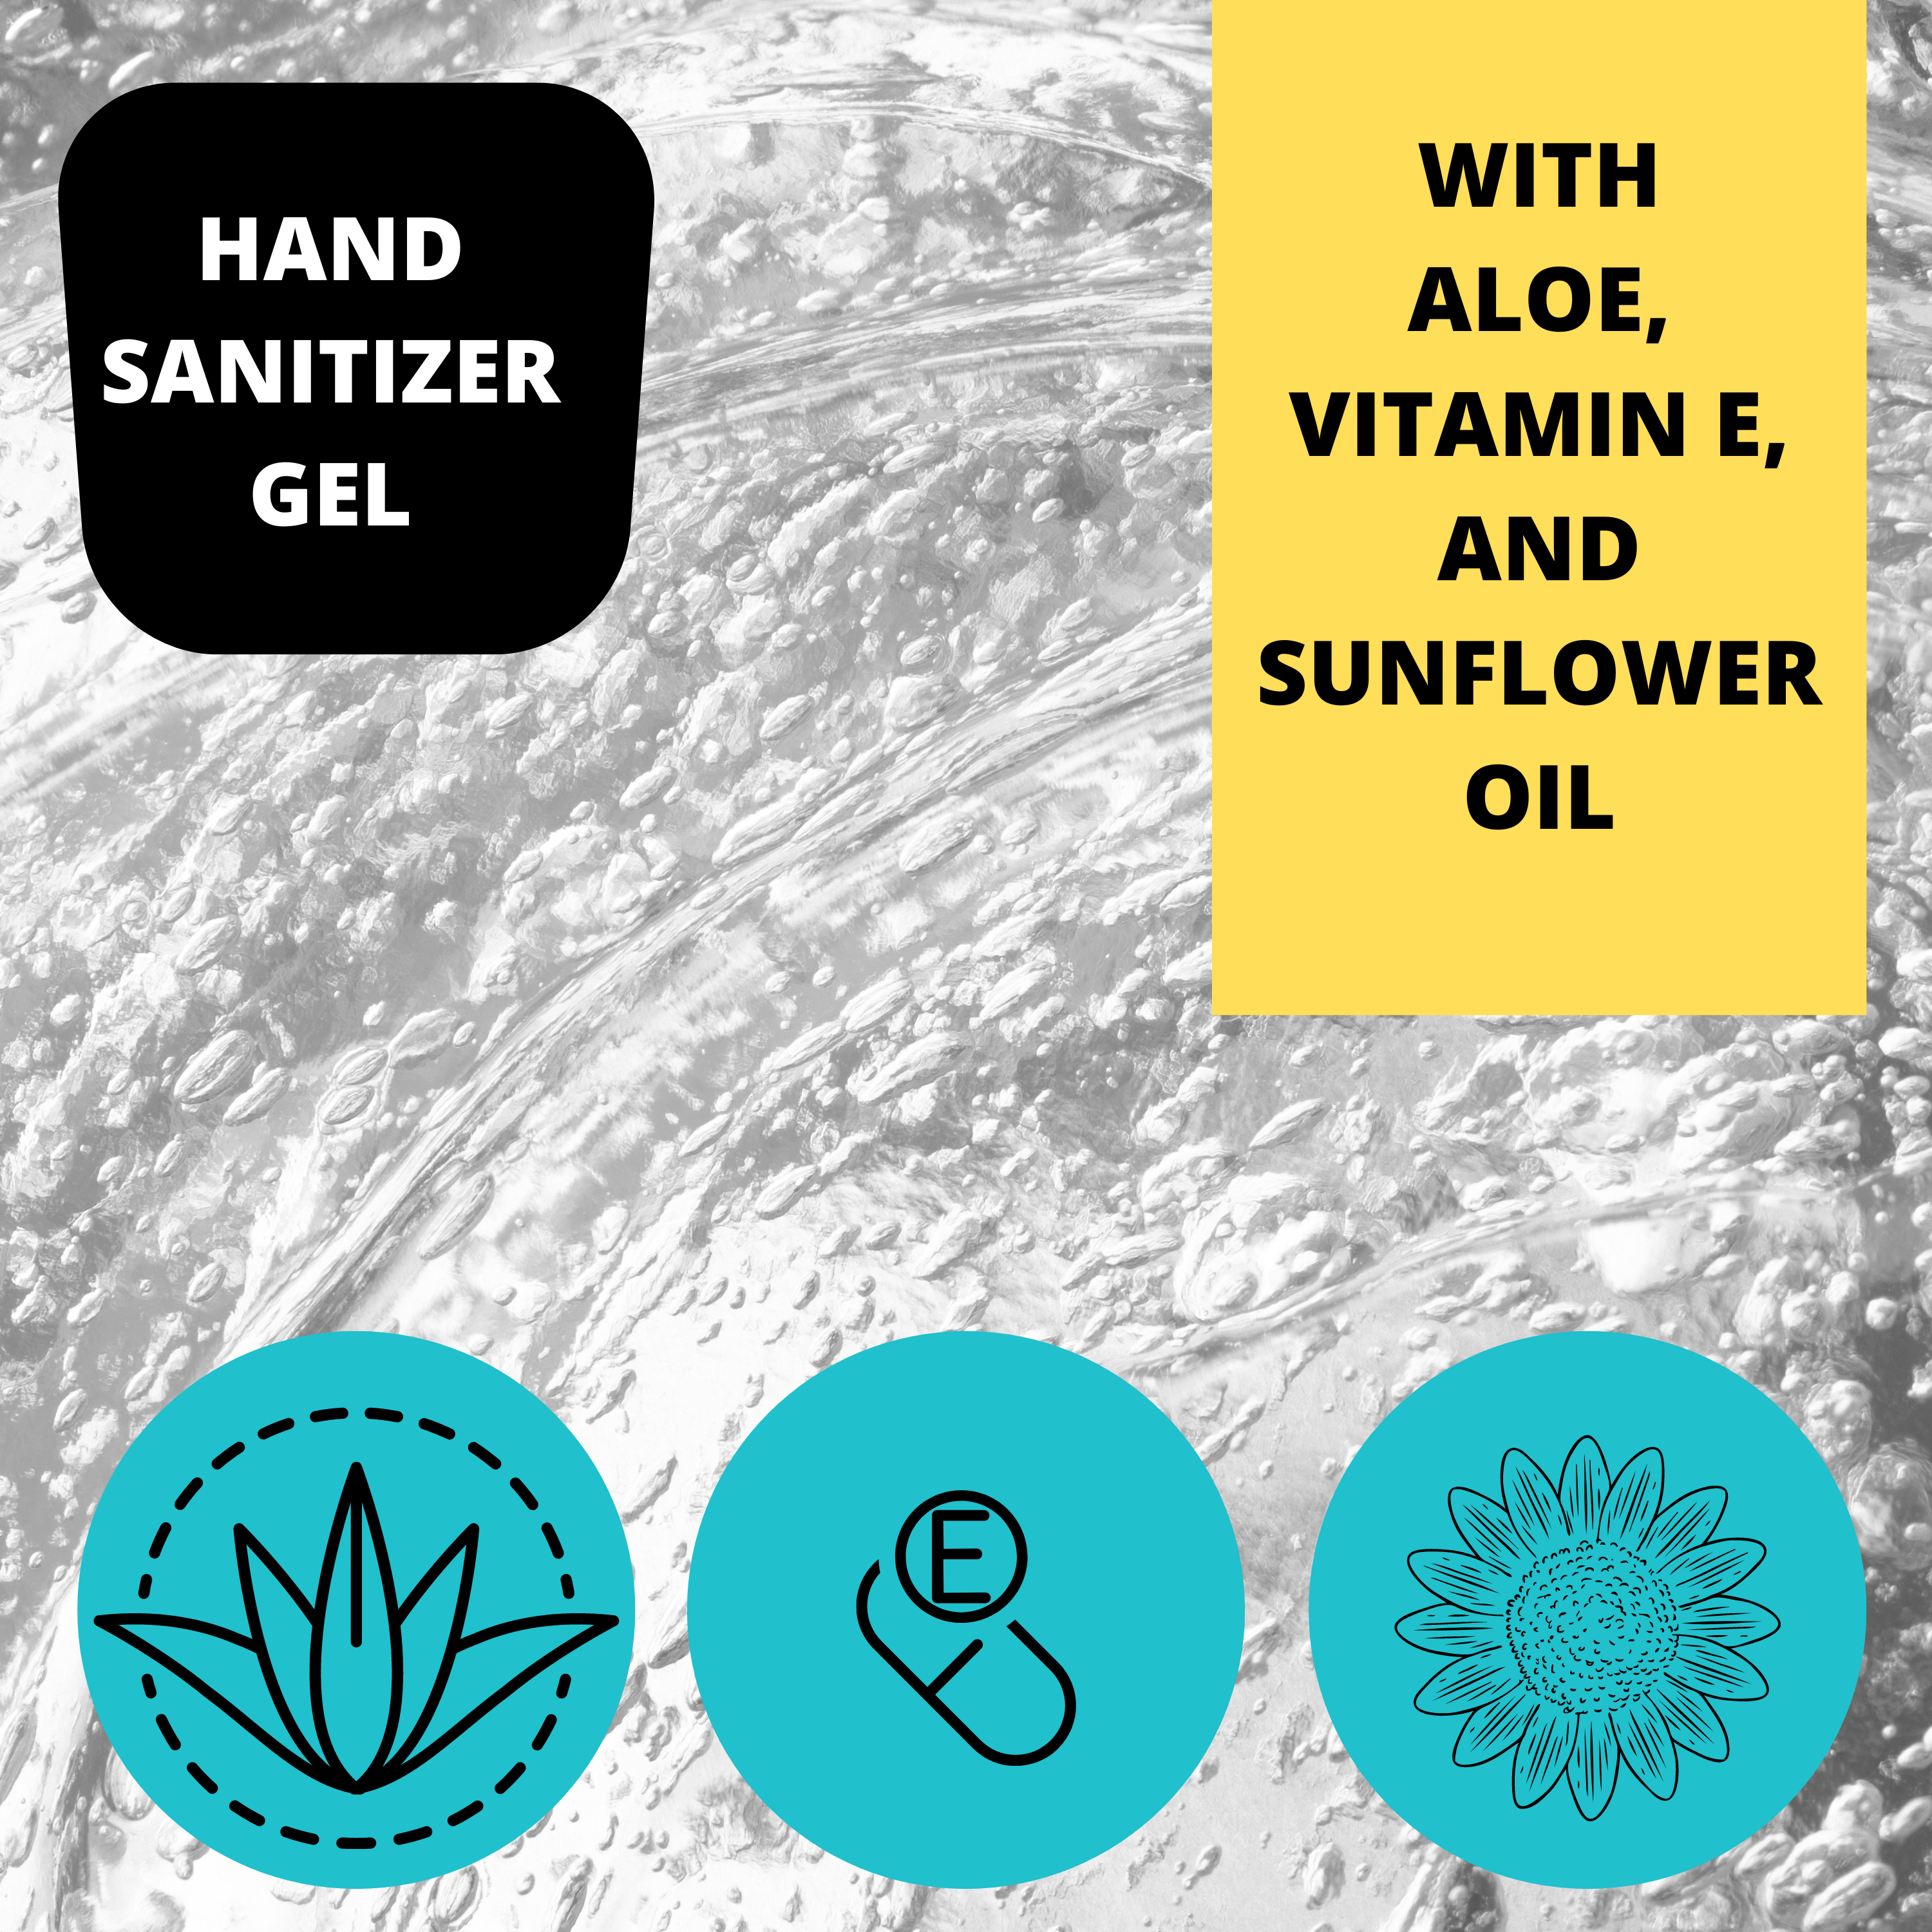 Black Canyon Autumn Spiced Fir Scented Hand Sanitizer Gel